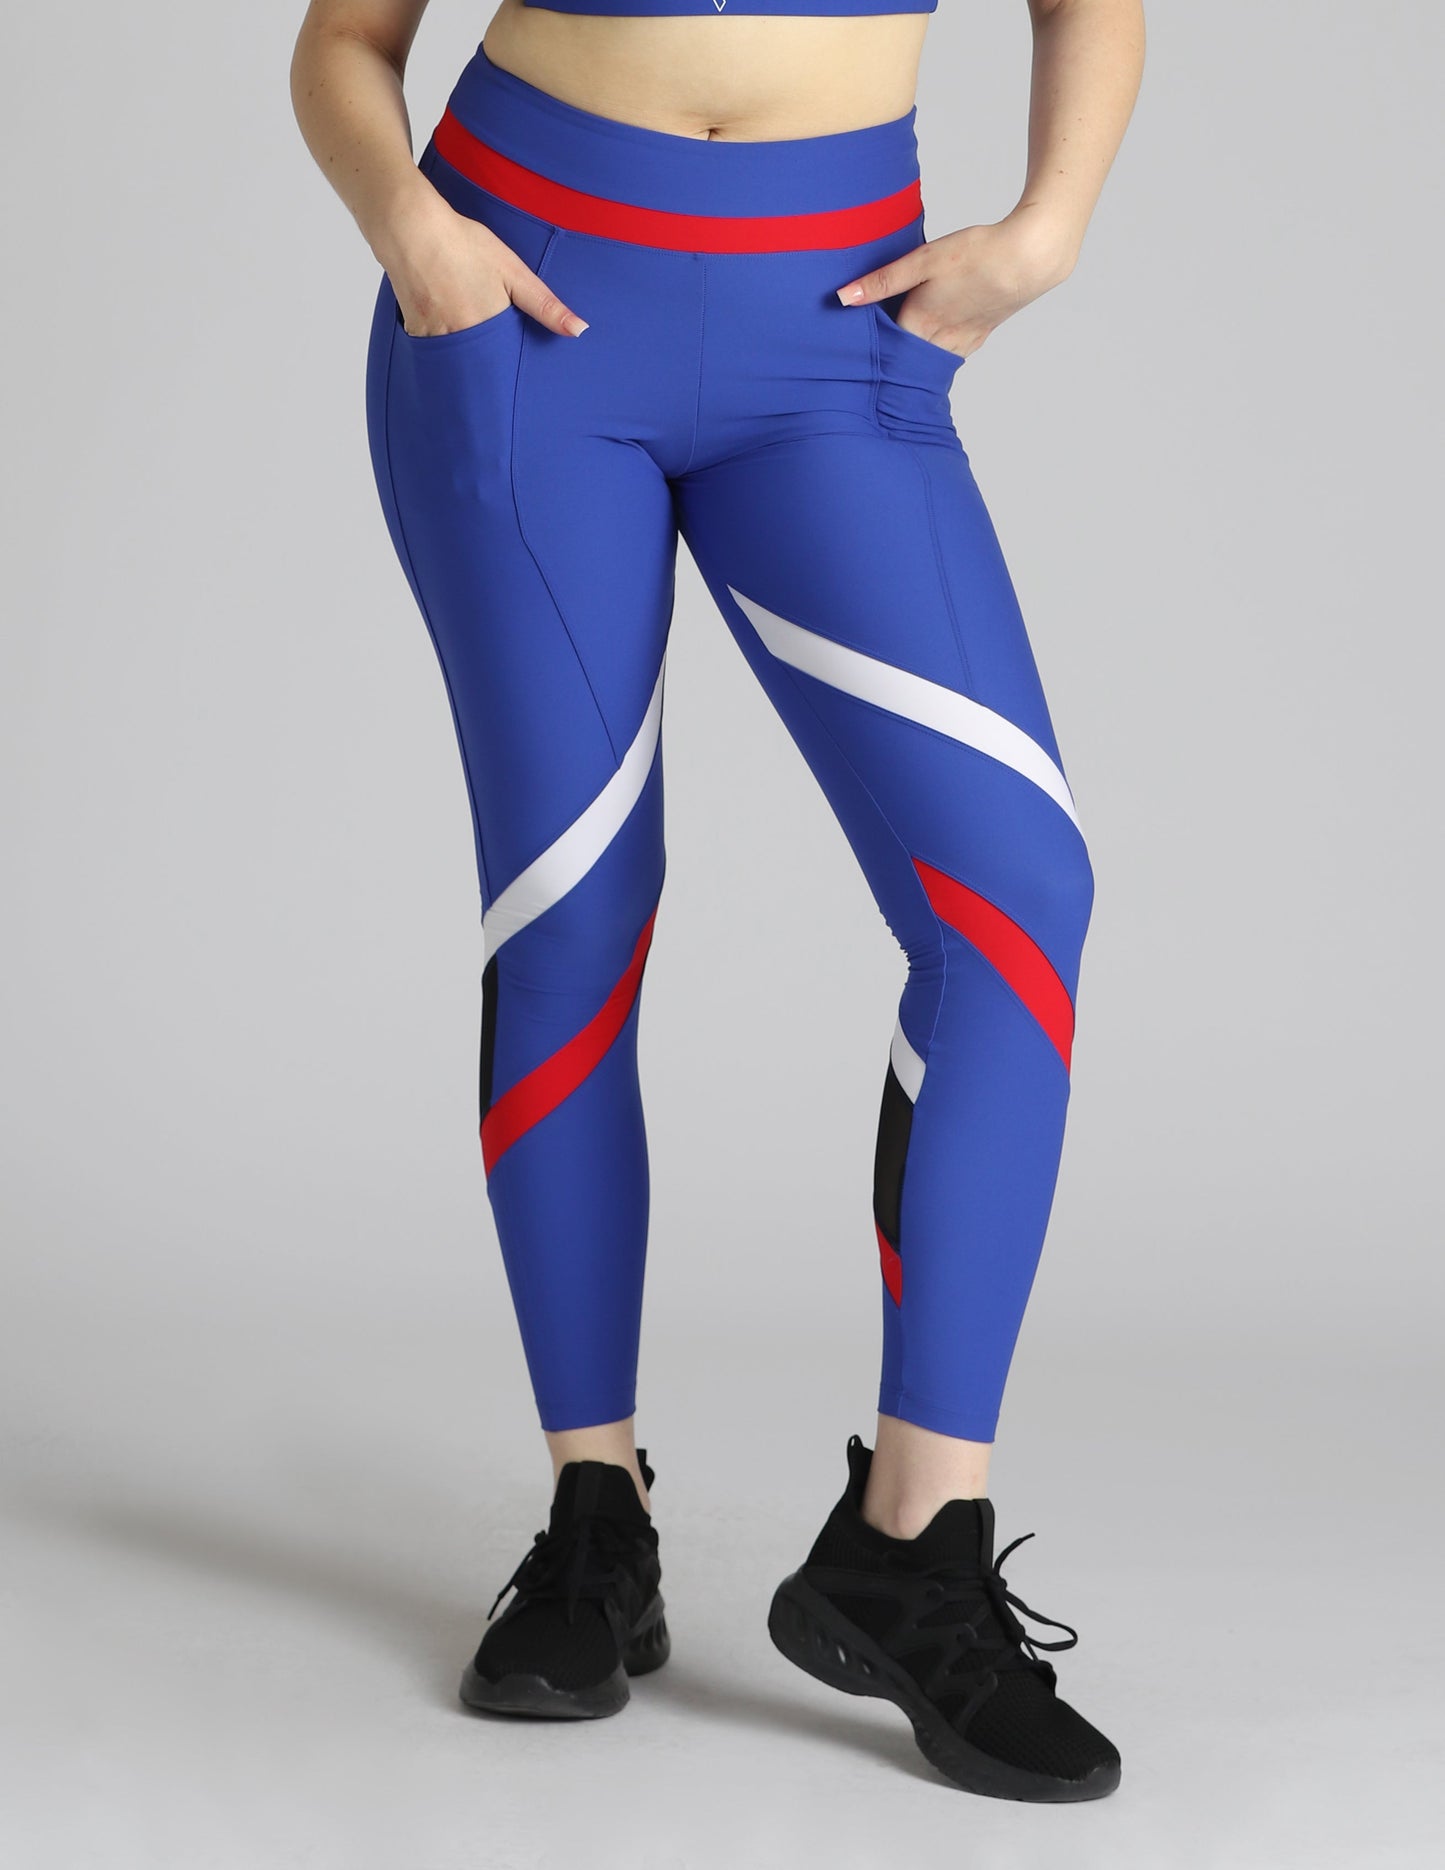 HERA - ELA Leggings Black - TIYE the coolest sportswear & gym apparel